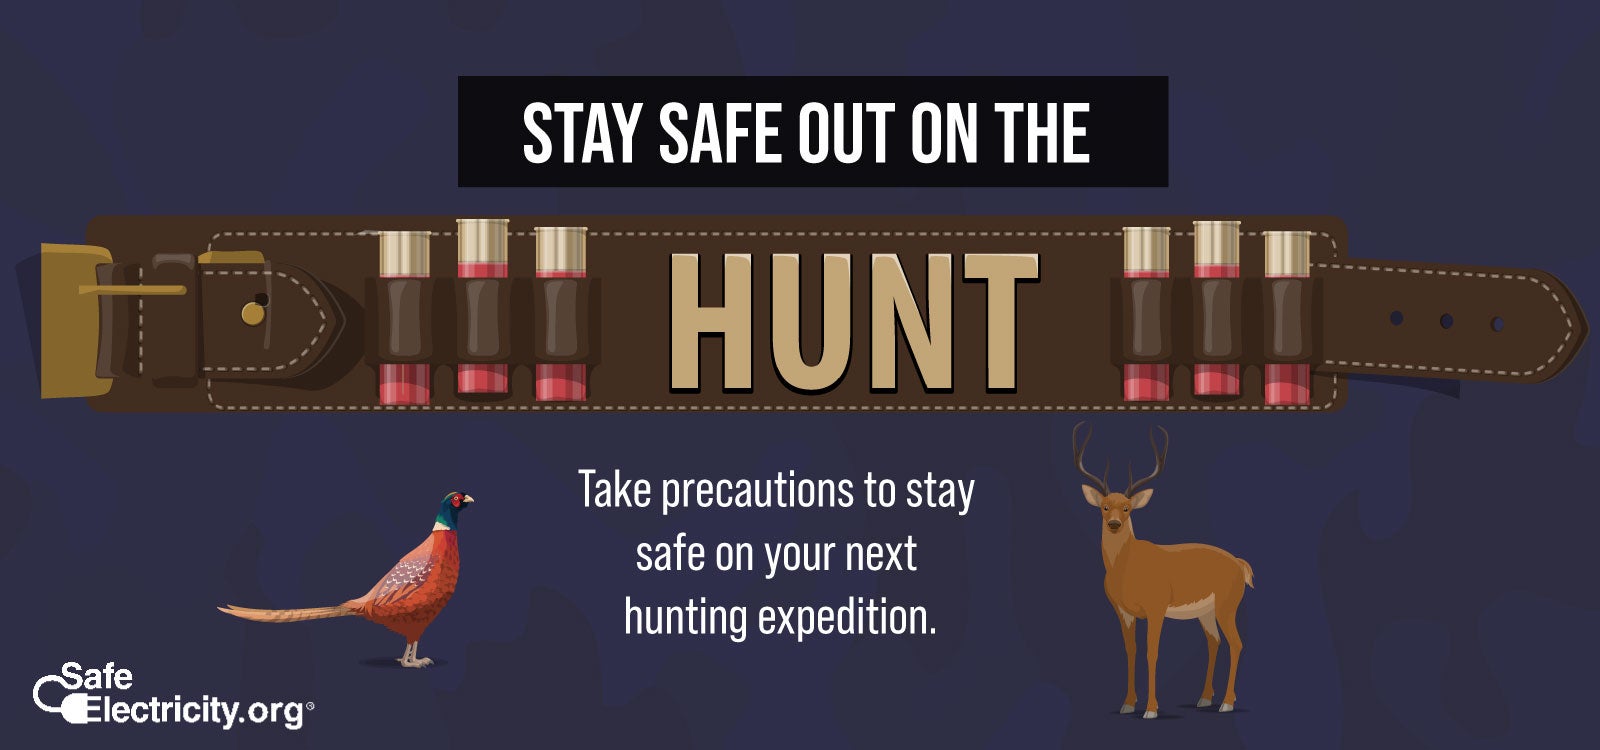 Stay safe on the hunt